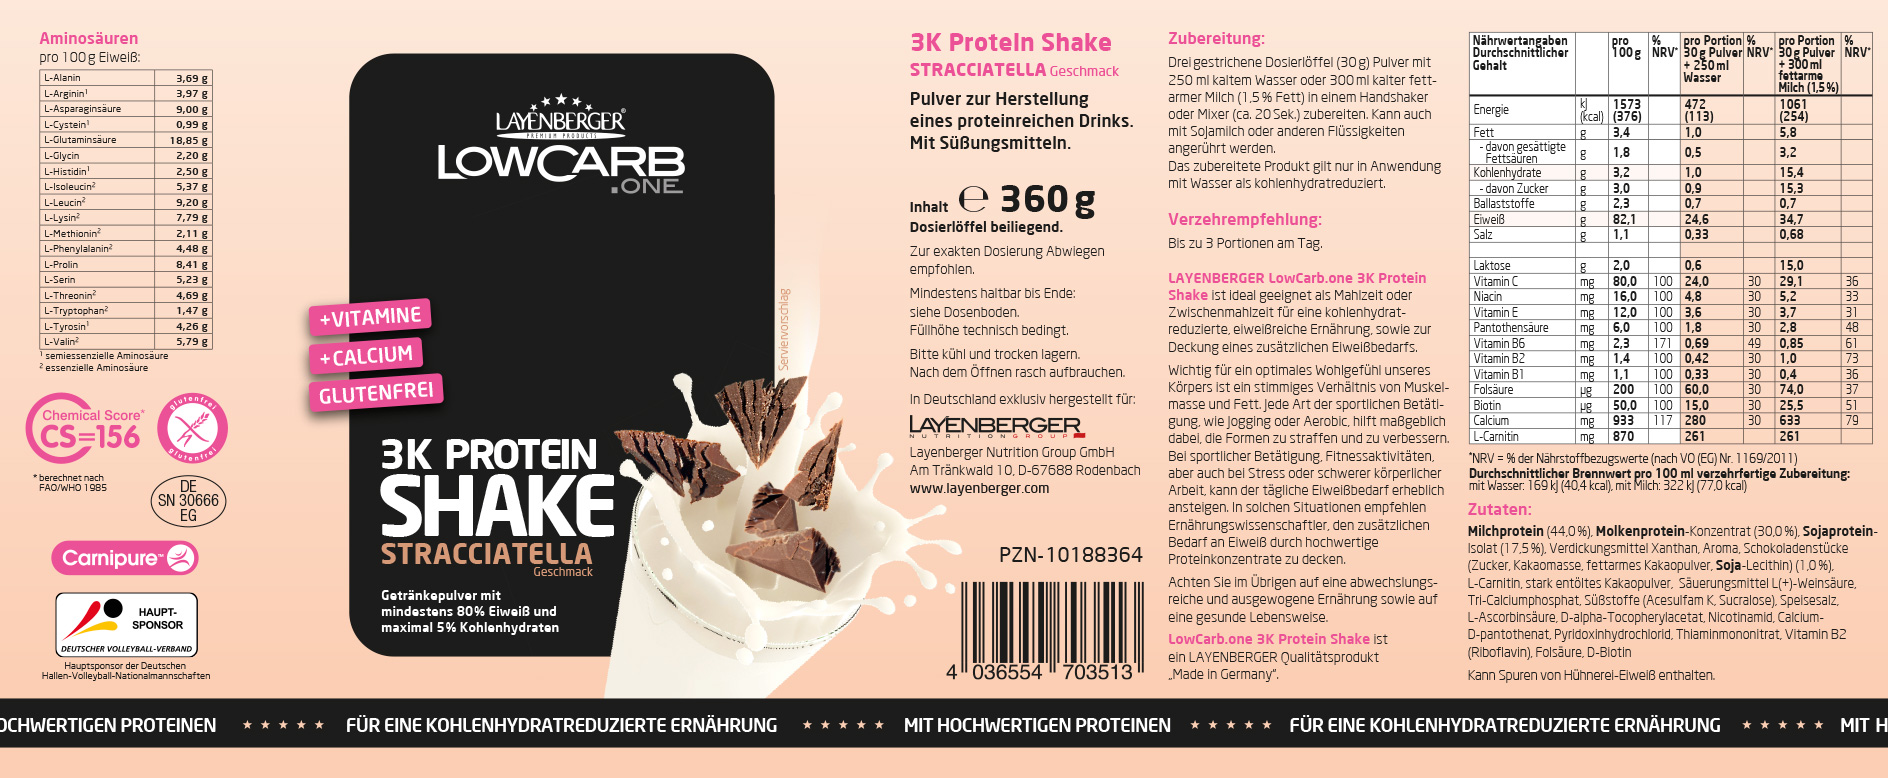 LAYENBERGER LowCarb.one 3K Protein Shake Stracciatella 360g